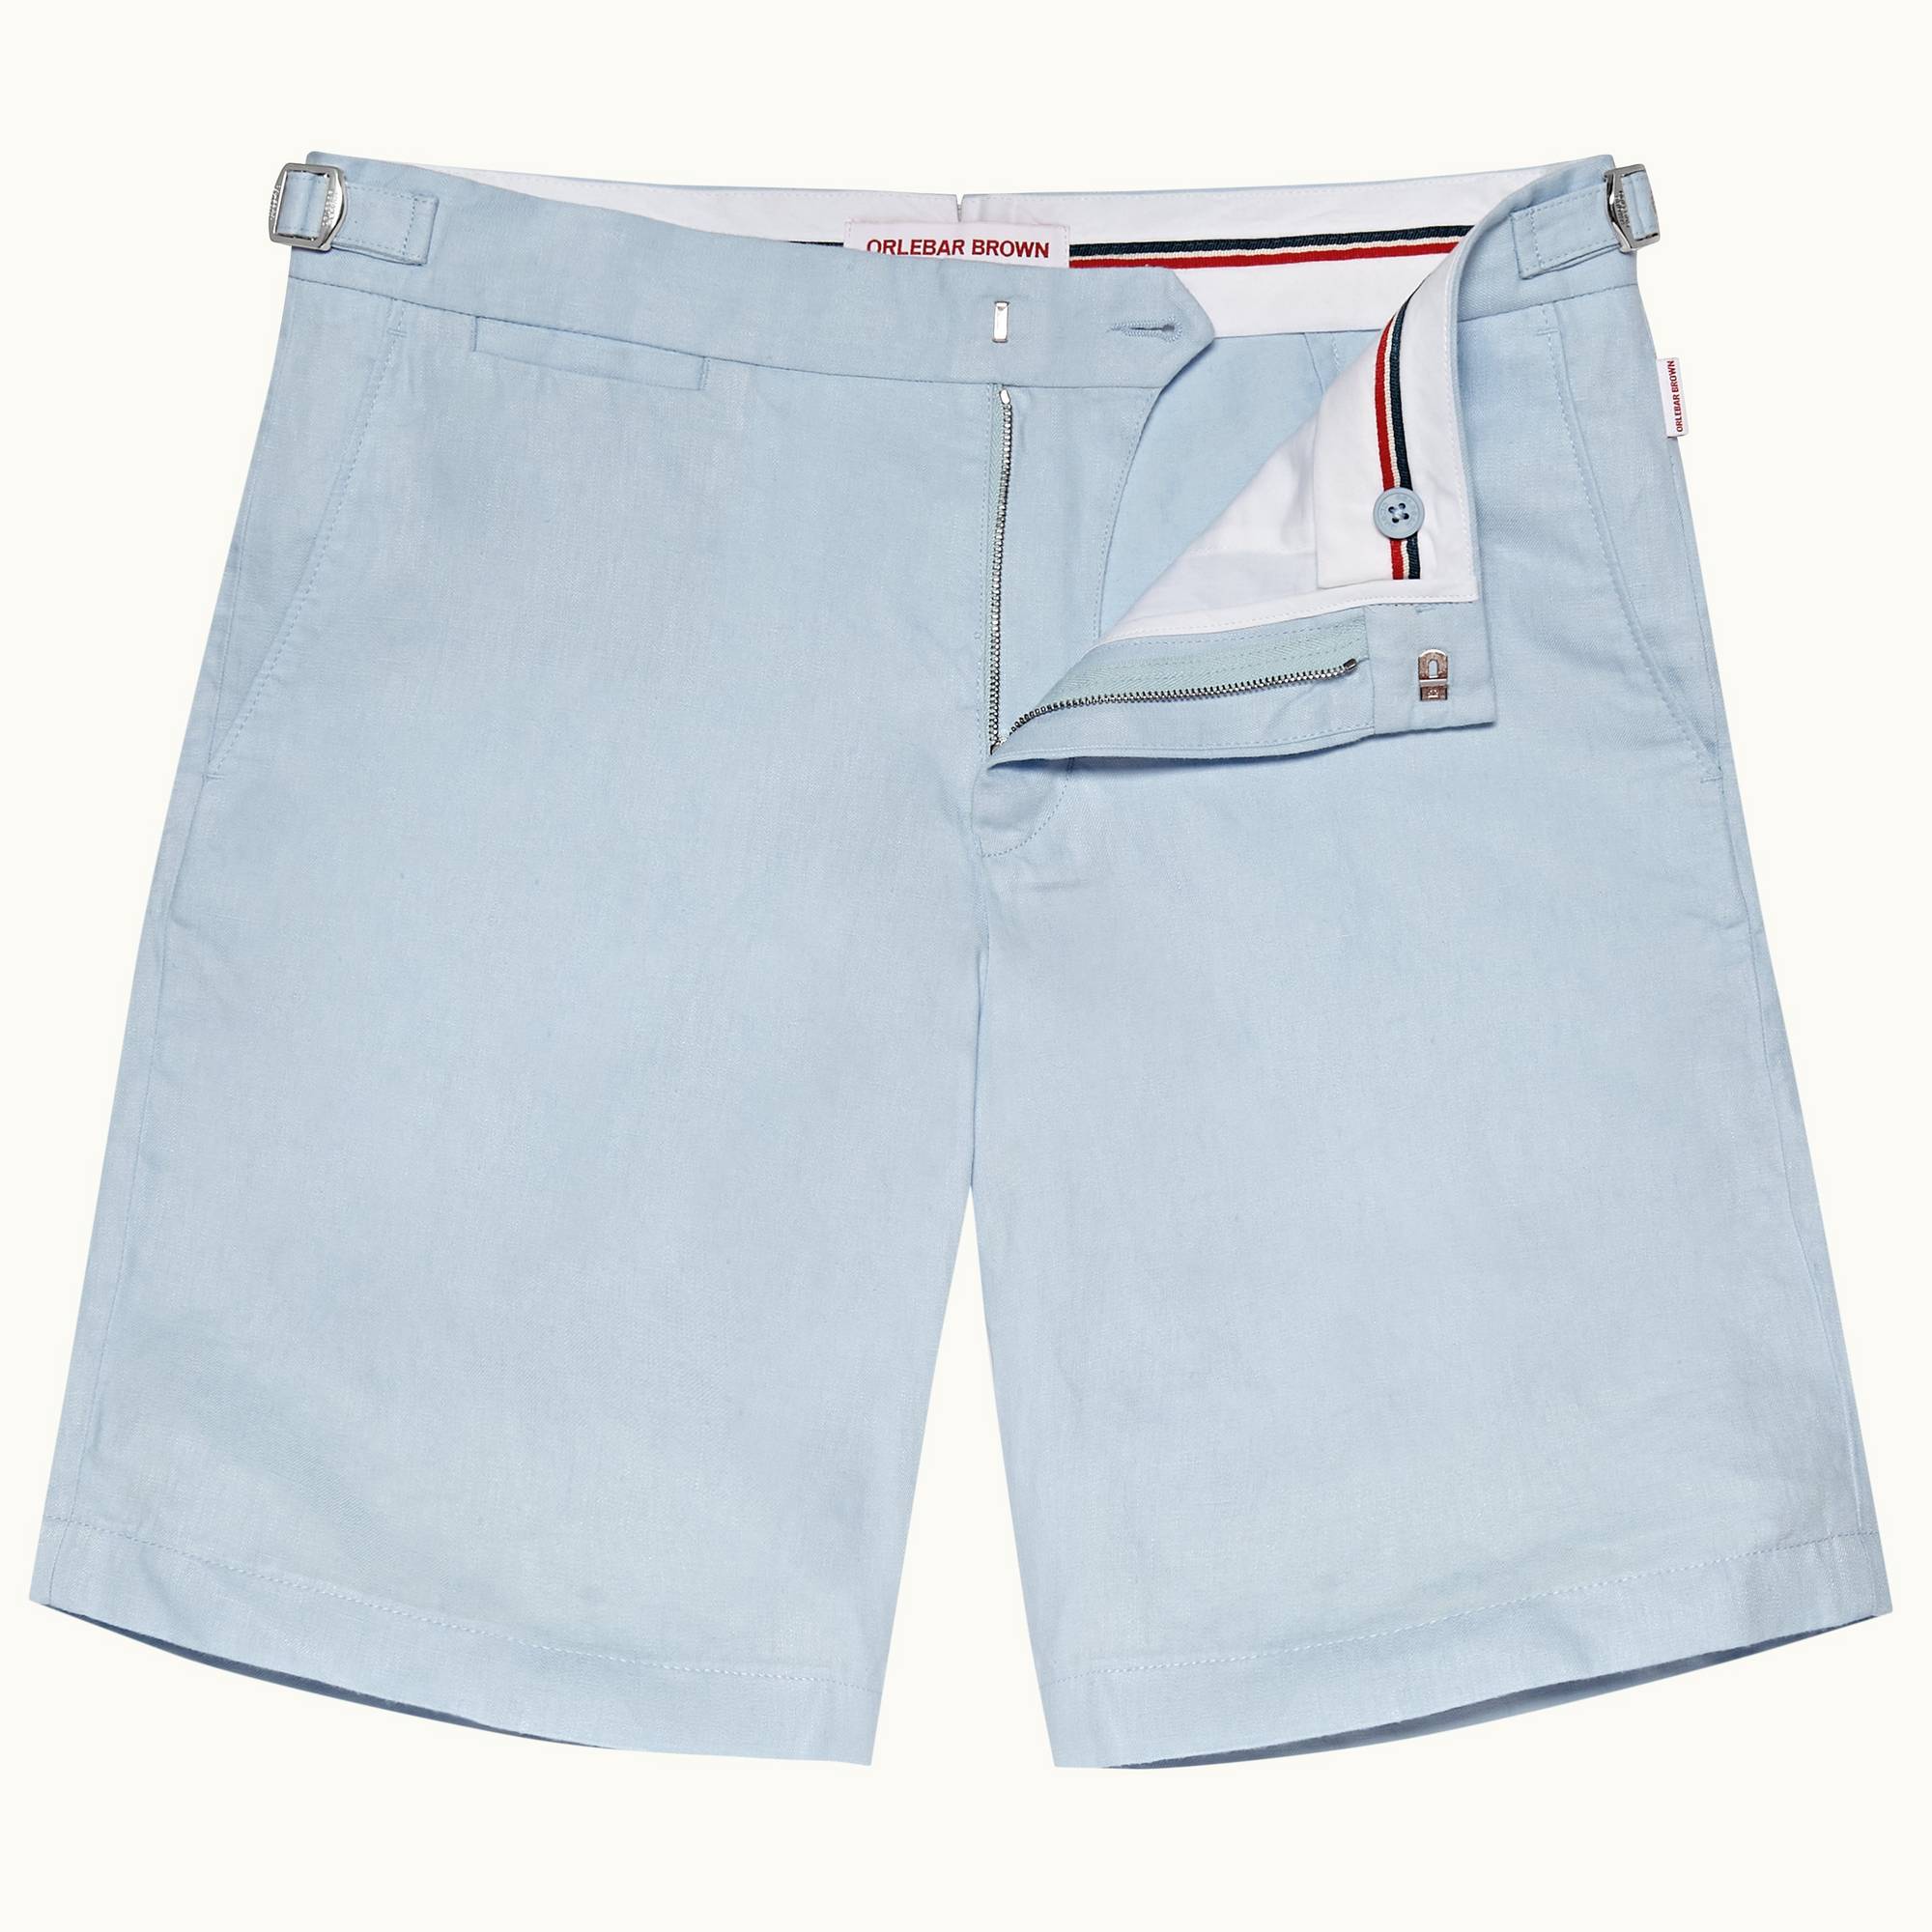 Norwich Linen - Mens Ice Blue Tailored Fit O.B Stripe Linen Shorts